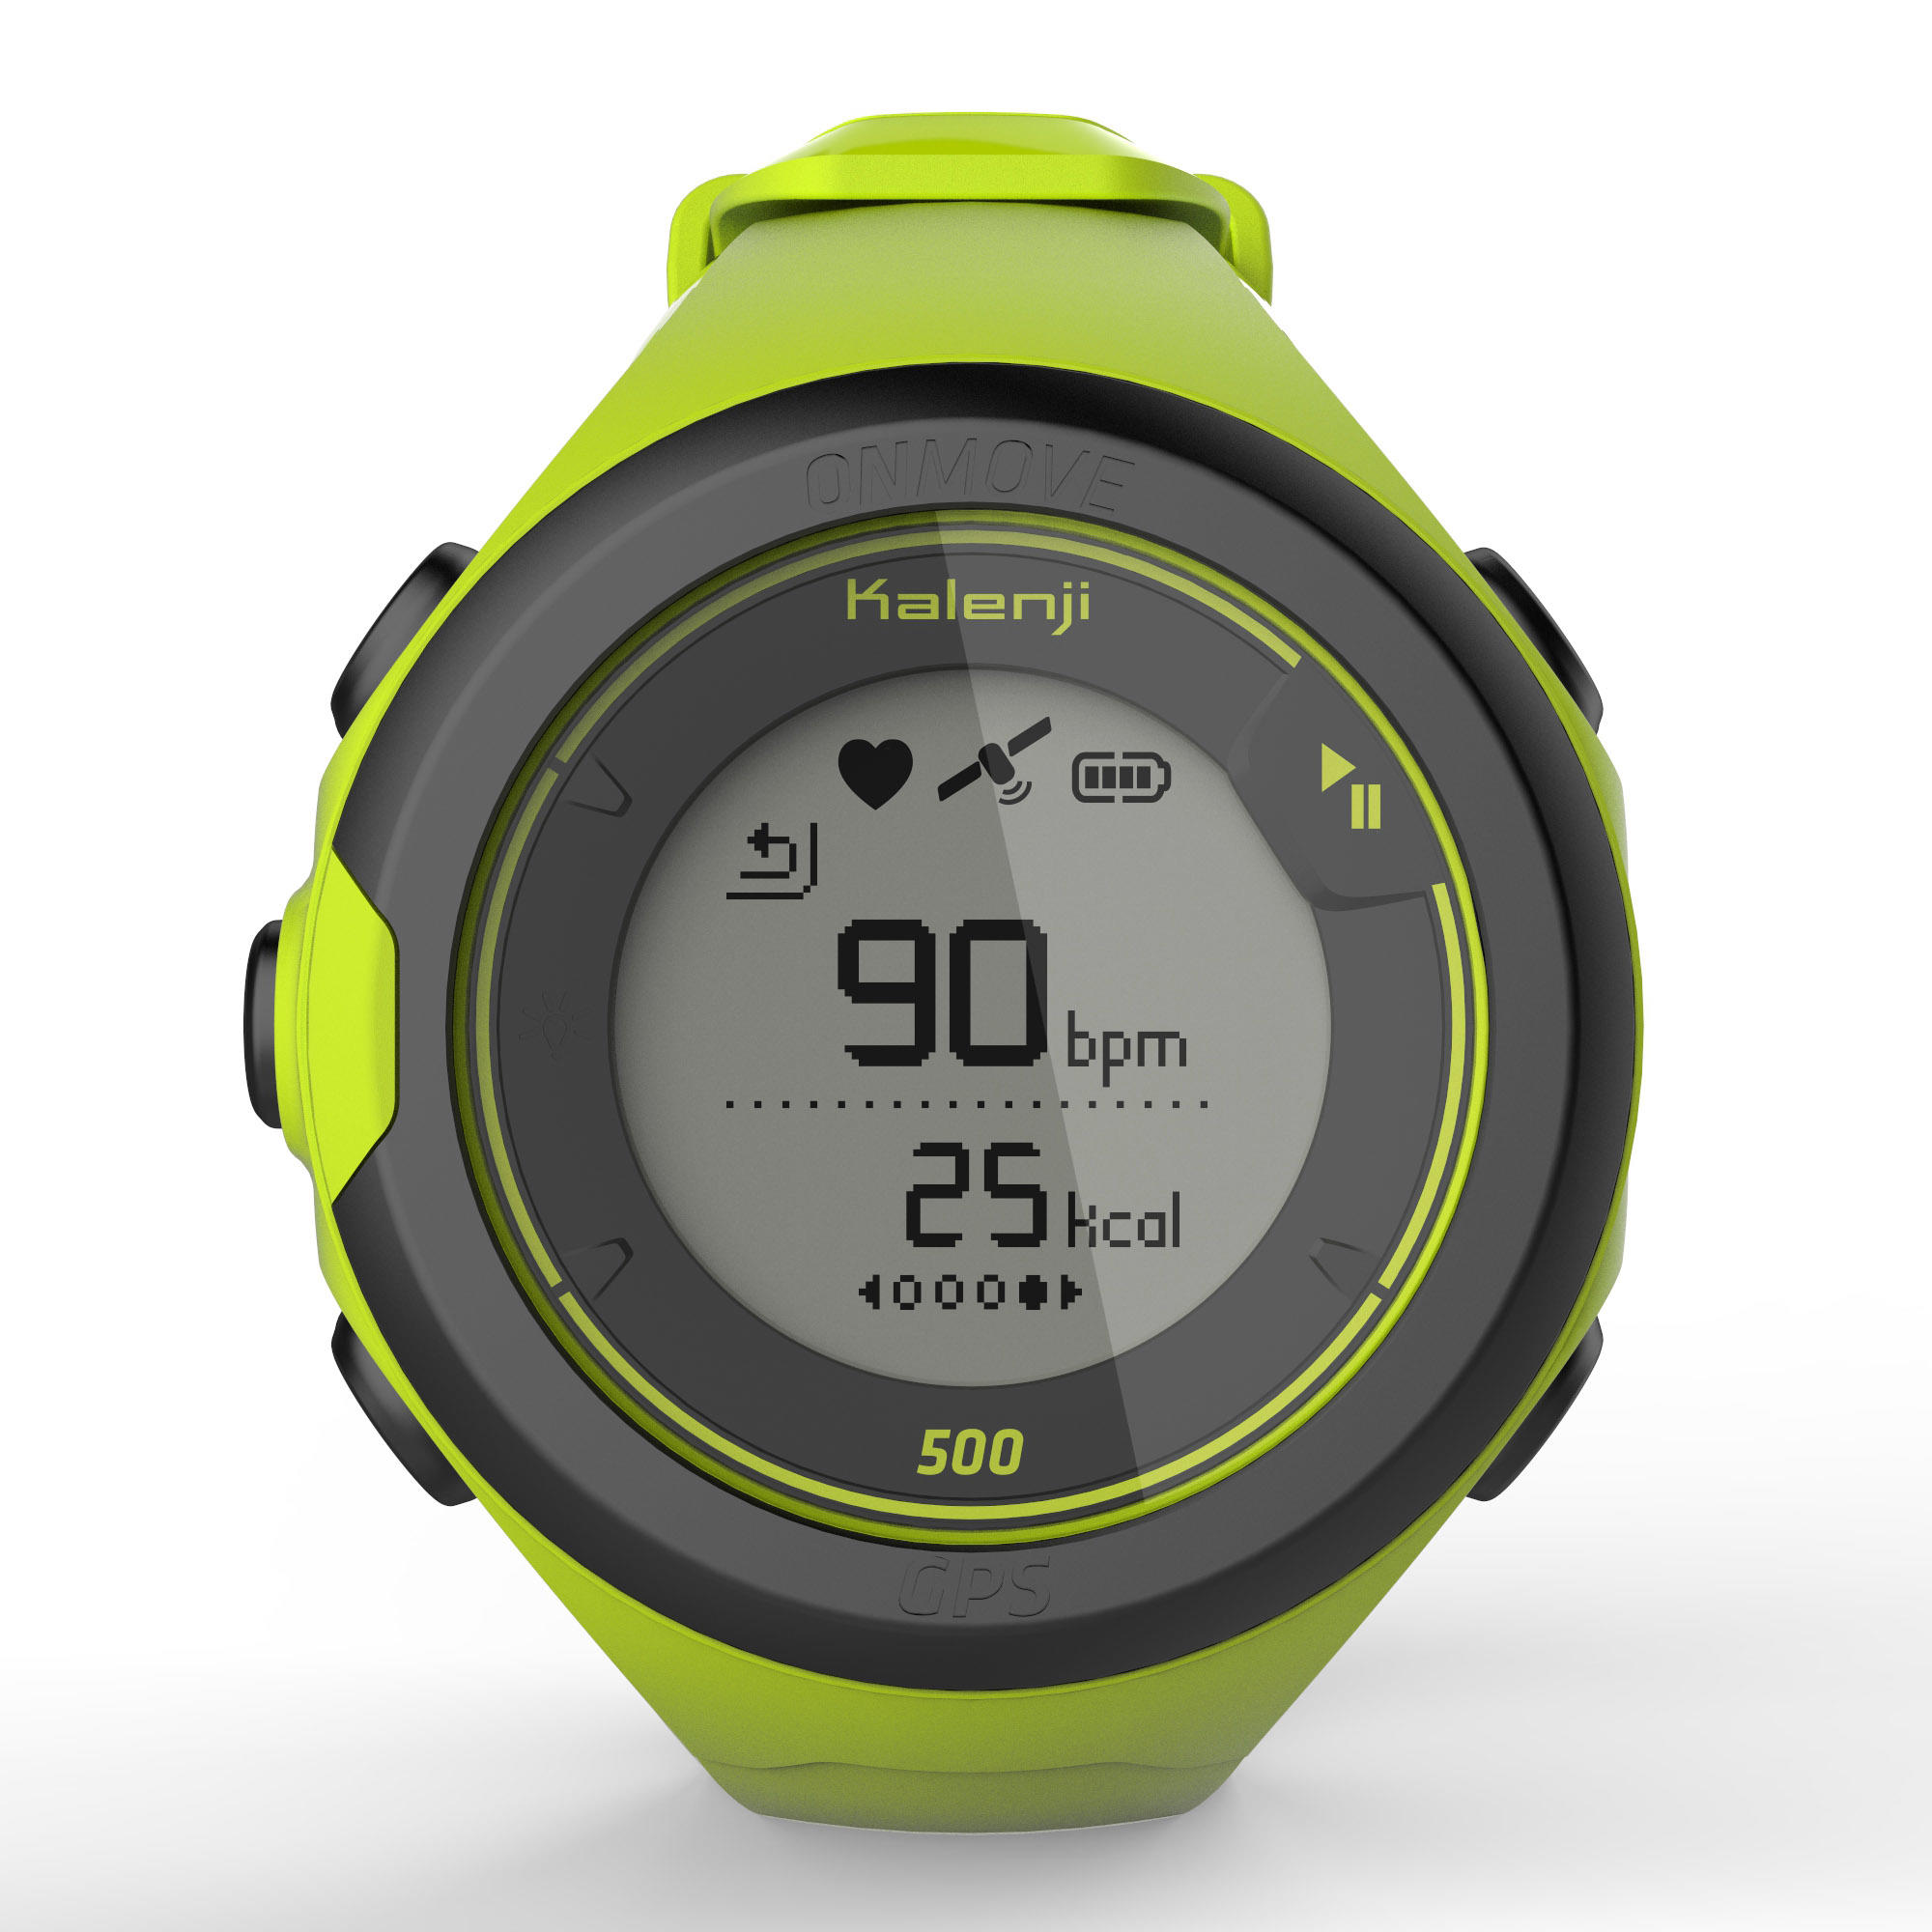 ONmove 500 GPS running watch and wrist heart rate monitor - yellow 7/17